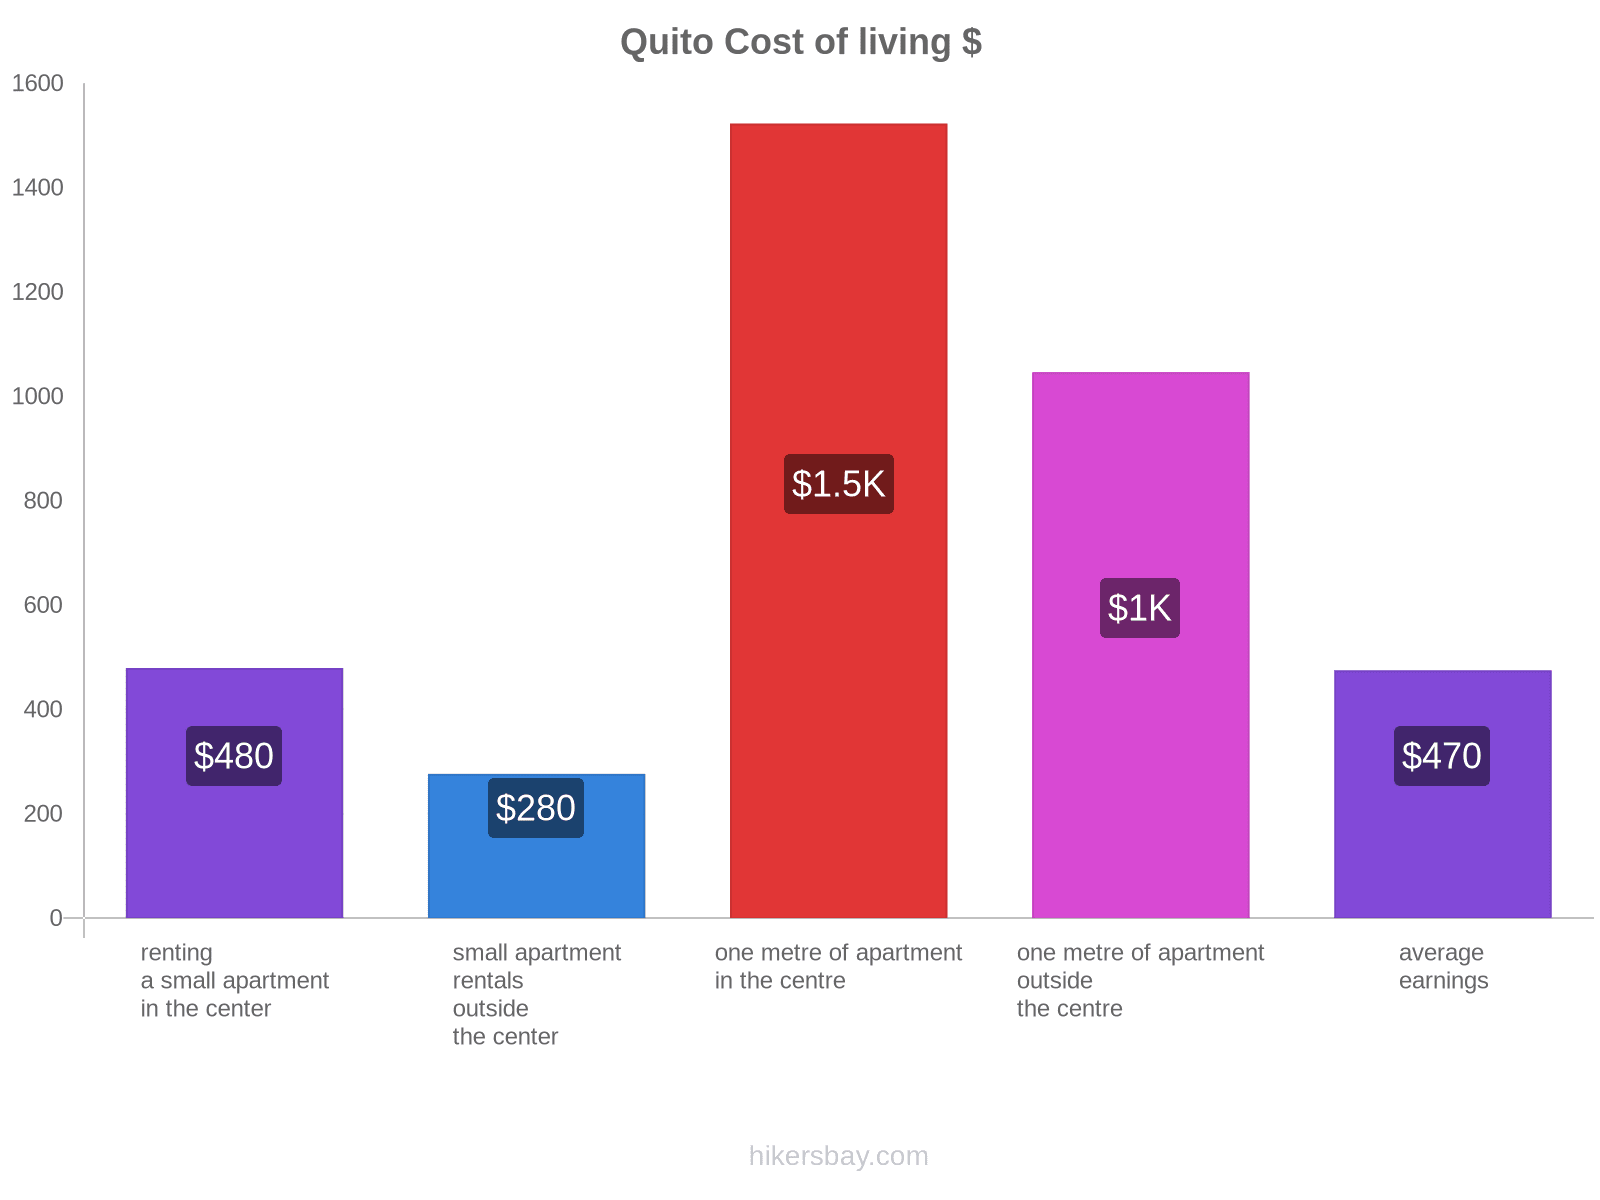 Quito cost of living hikersbay.com